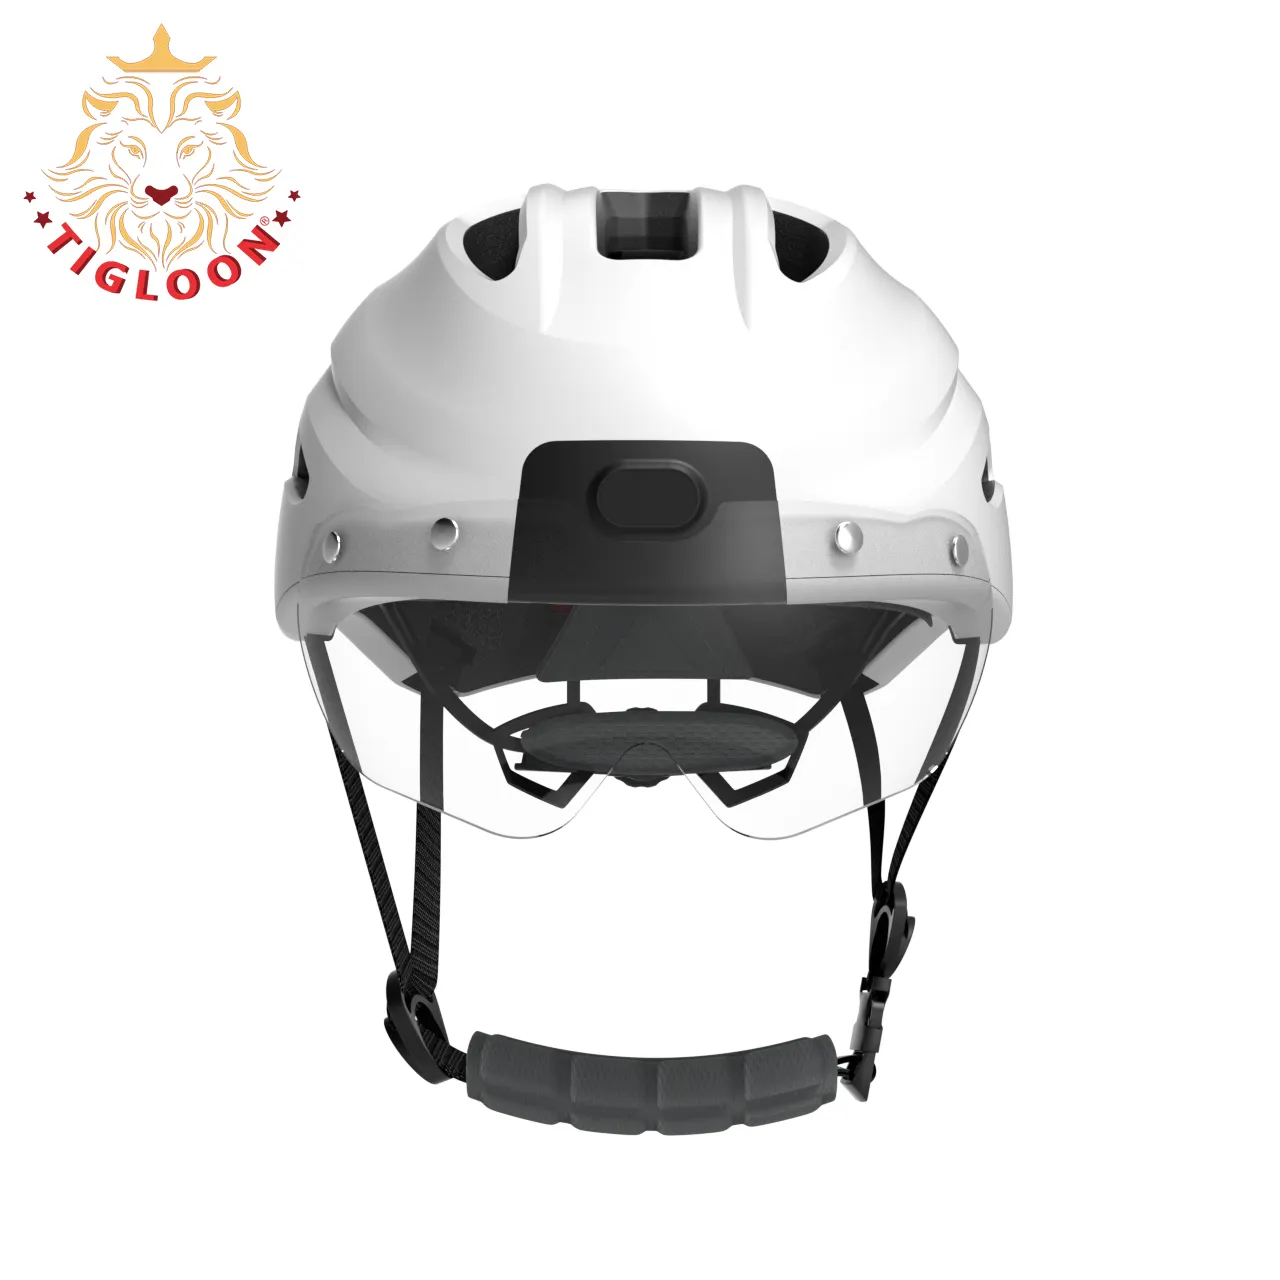 HD 4K Waterproof Camera Sports Helmet DV Video Recorder Camcorder Motorcycle Action Camera Helmet For Bicycle